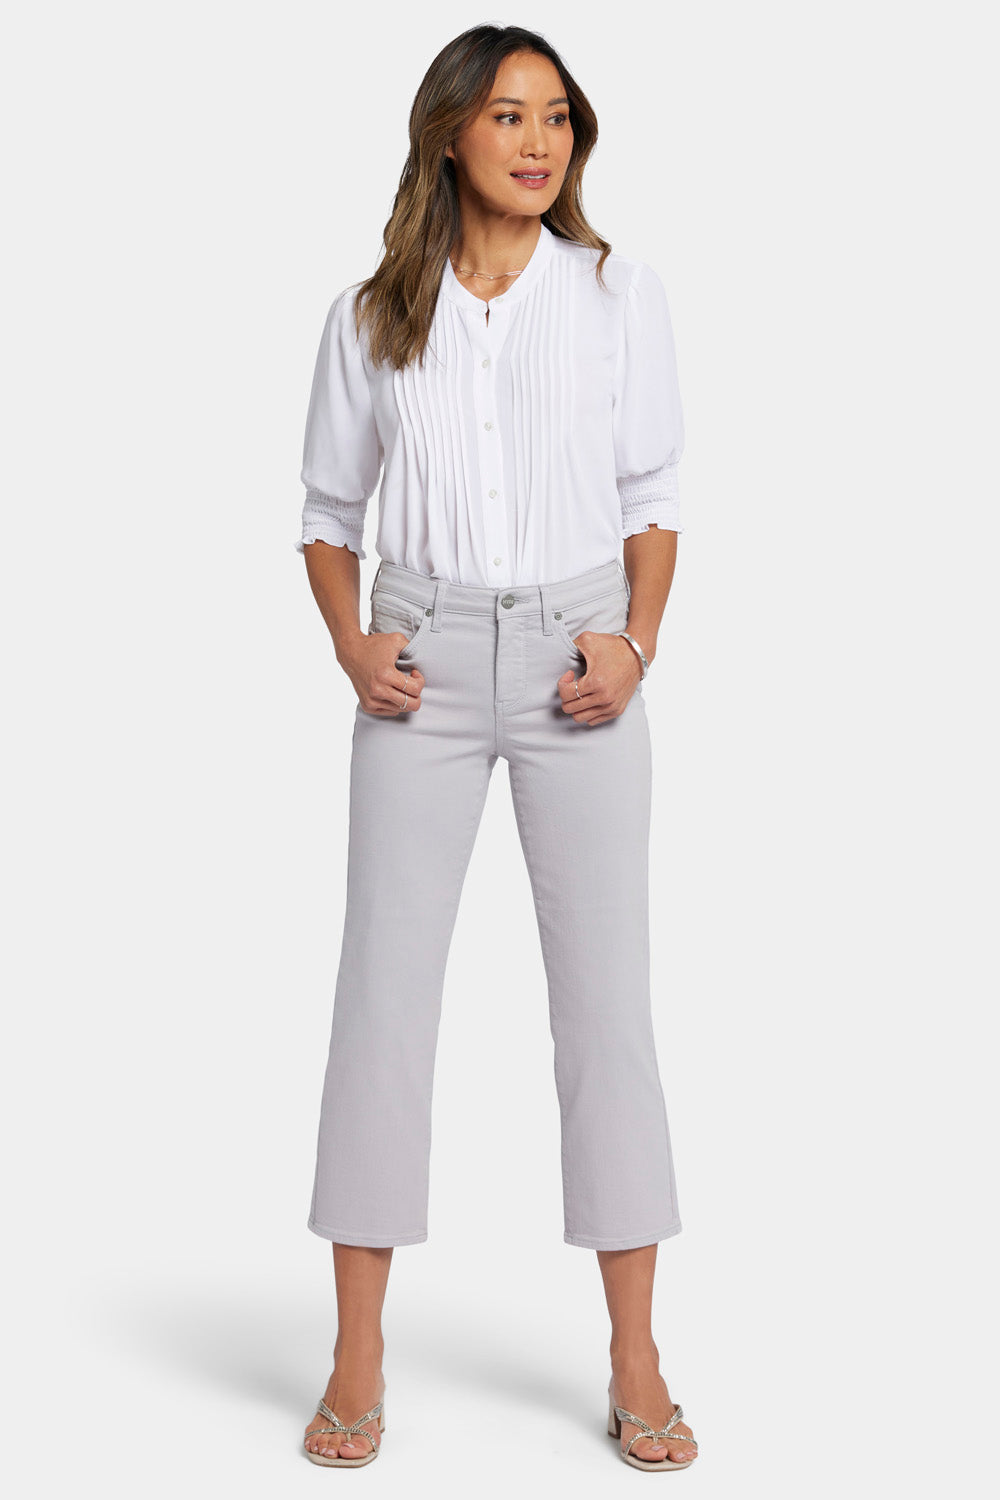 Joni Relaxed Capri Jeans With High Rise - Misty Tie Dye Grey | NYDJ